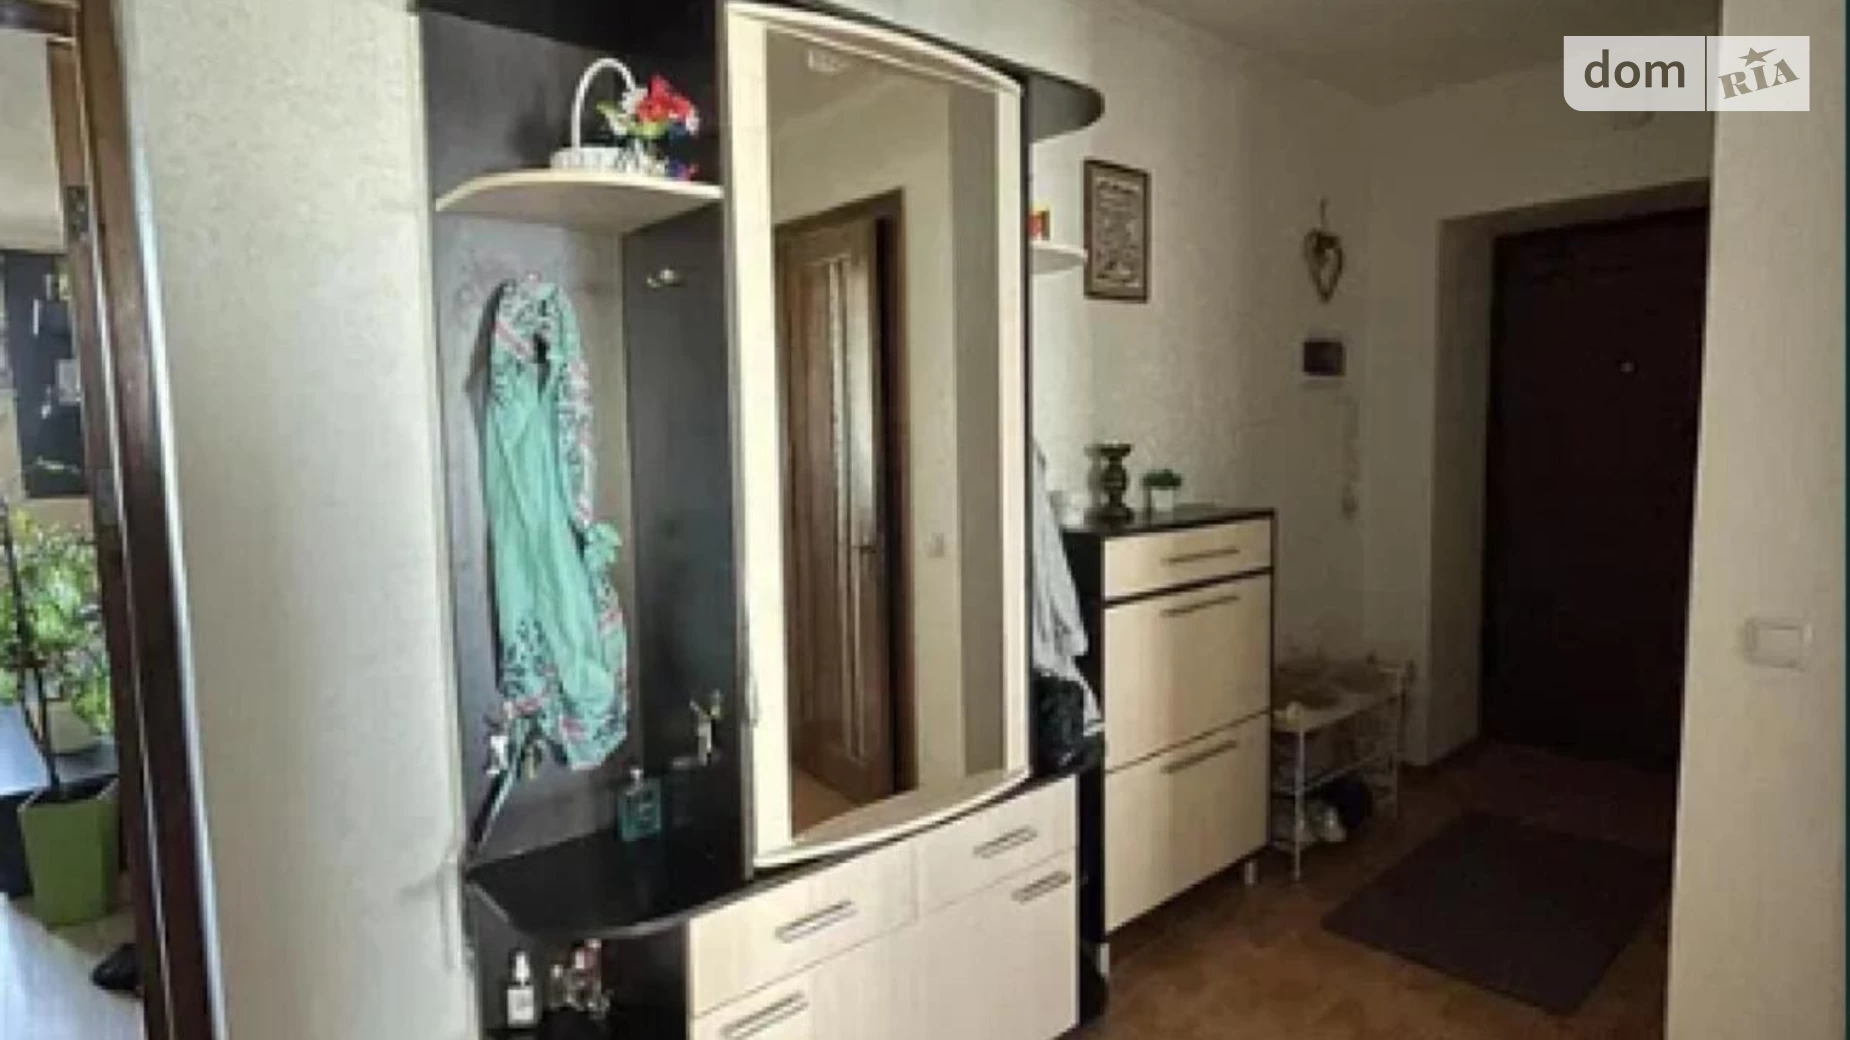 Продается 2-комнатная квартира 68 кв. м в Ивано-Франковске - фото 3